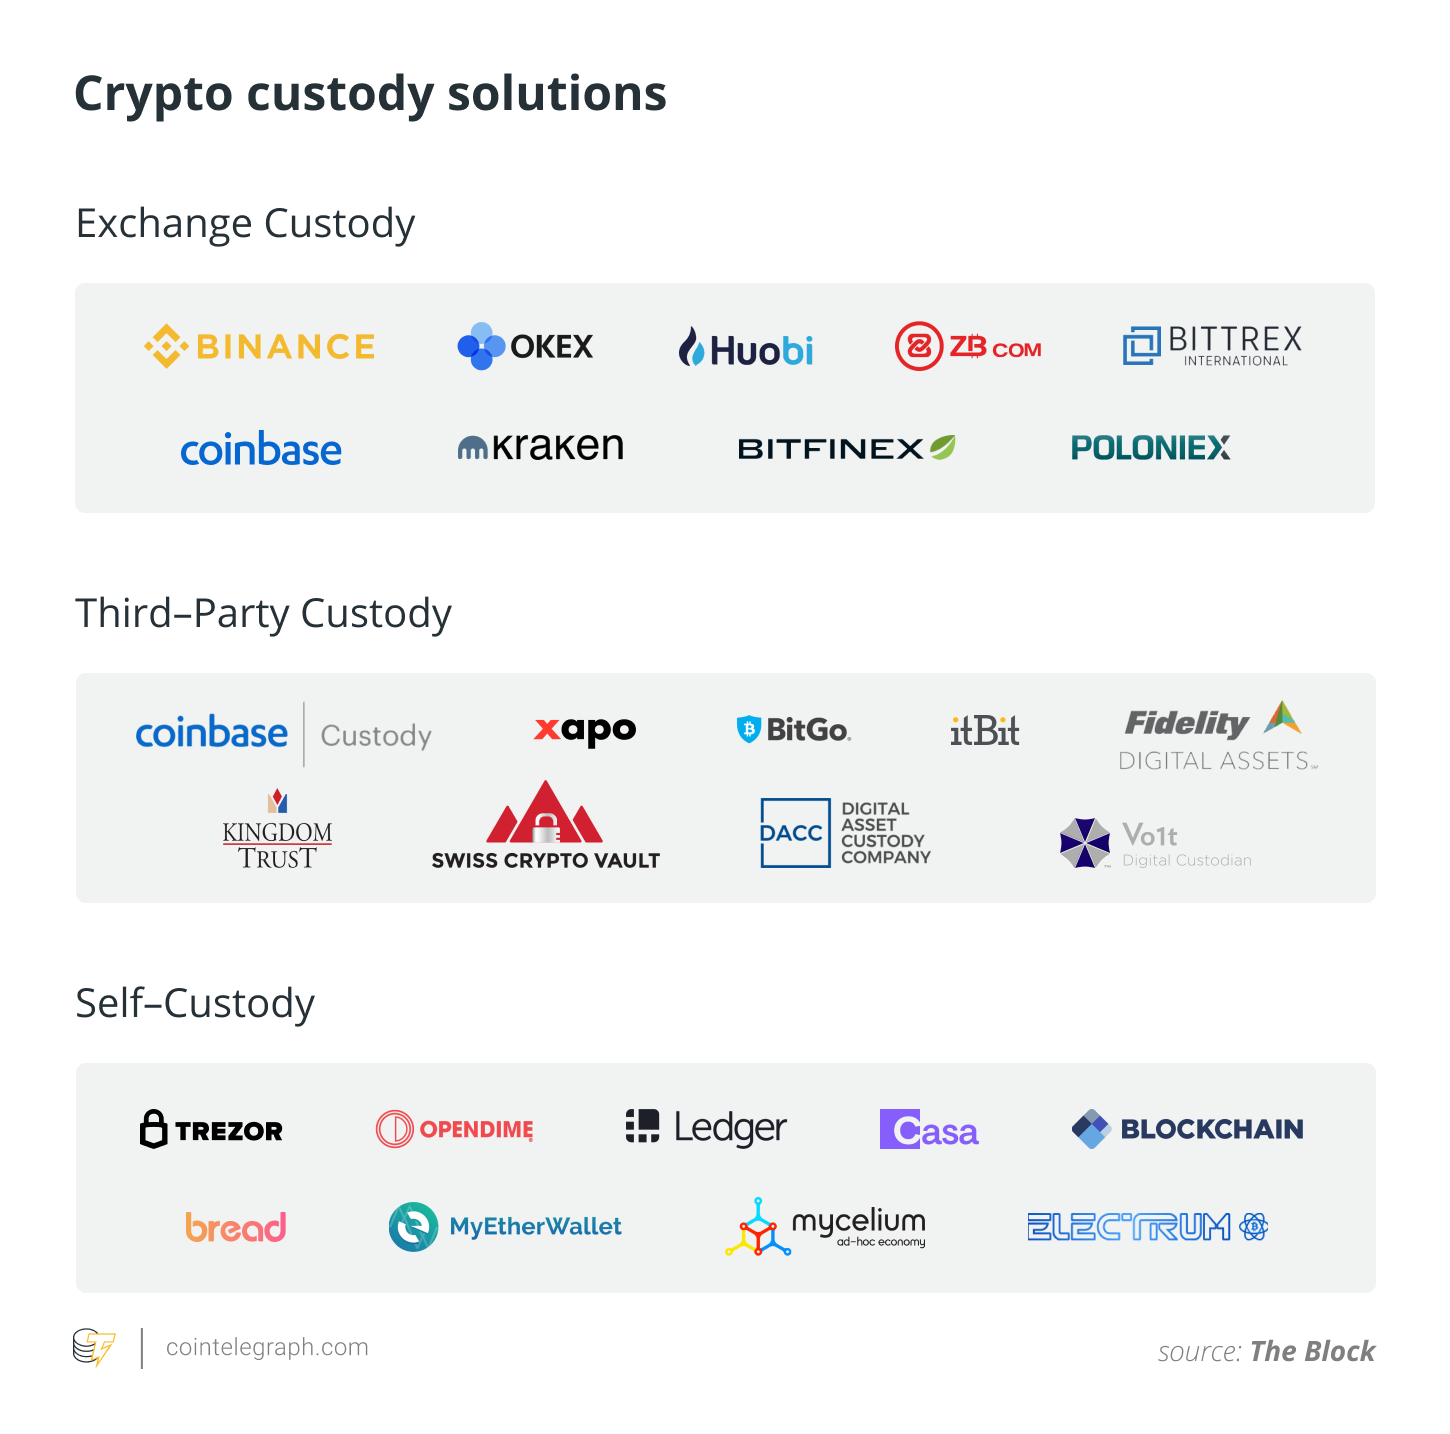 Crypto custody solutions